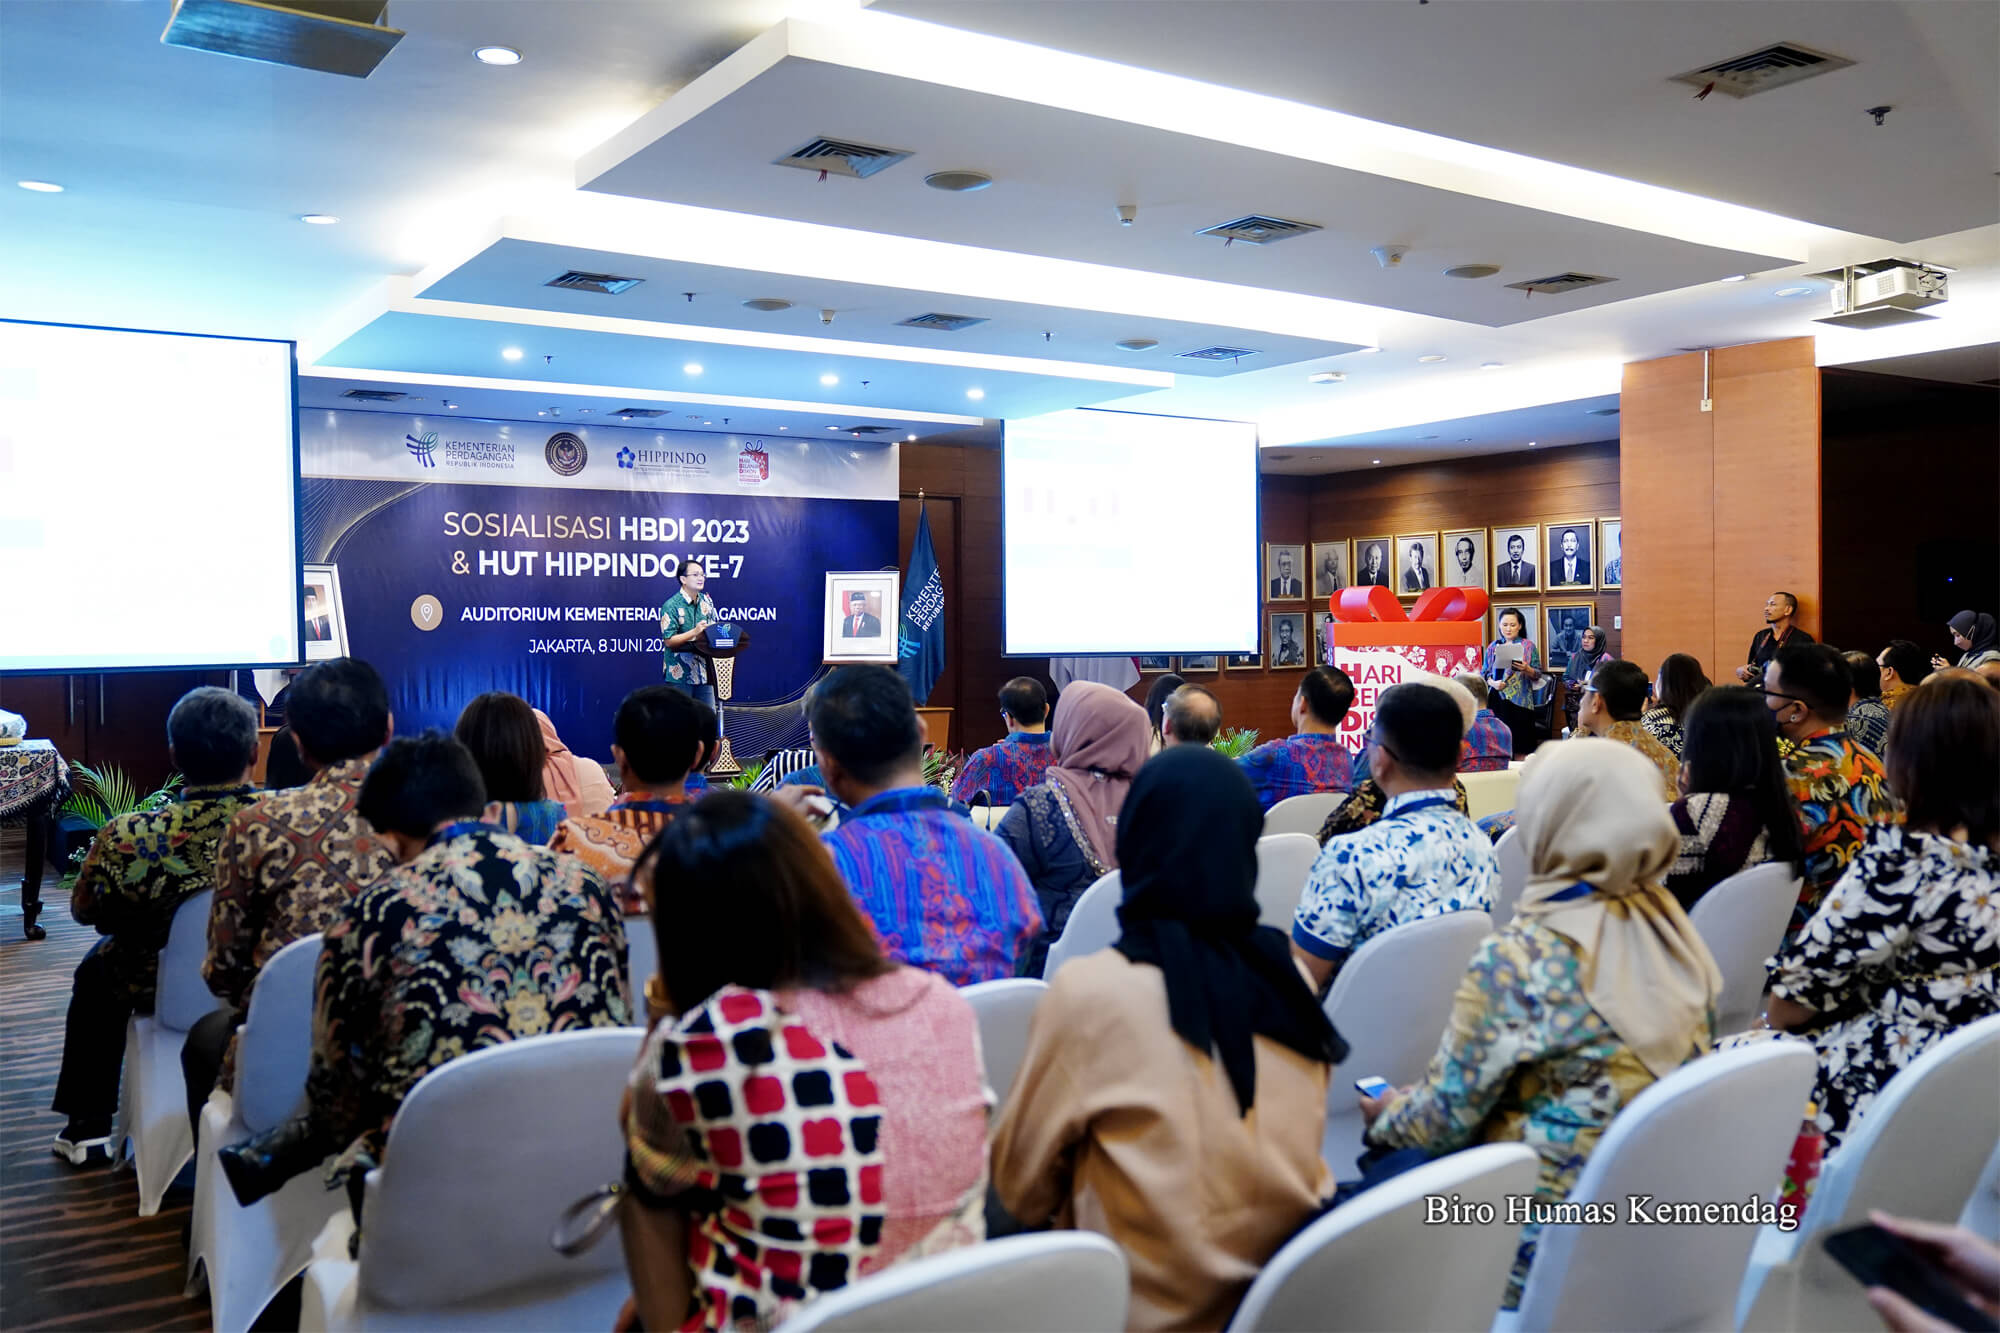 Wamendag menambahkan, kegiatan HBDI yang dilaksanakan di berbagai pusat perbelanjaan, baik daring maupun luring, akan menggerakkan daya beli masyarakat dan mendorong  perekonomian Indonesia yang diproyeksikan tumbuh sekitar 4,5–5,3% di 2023.